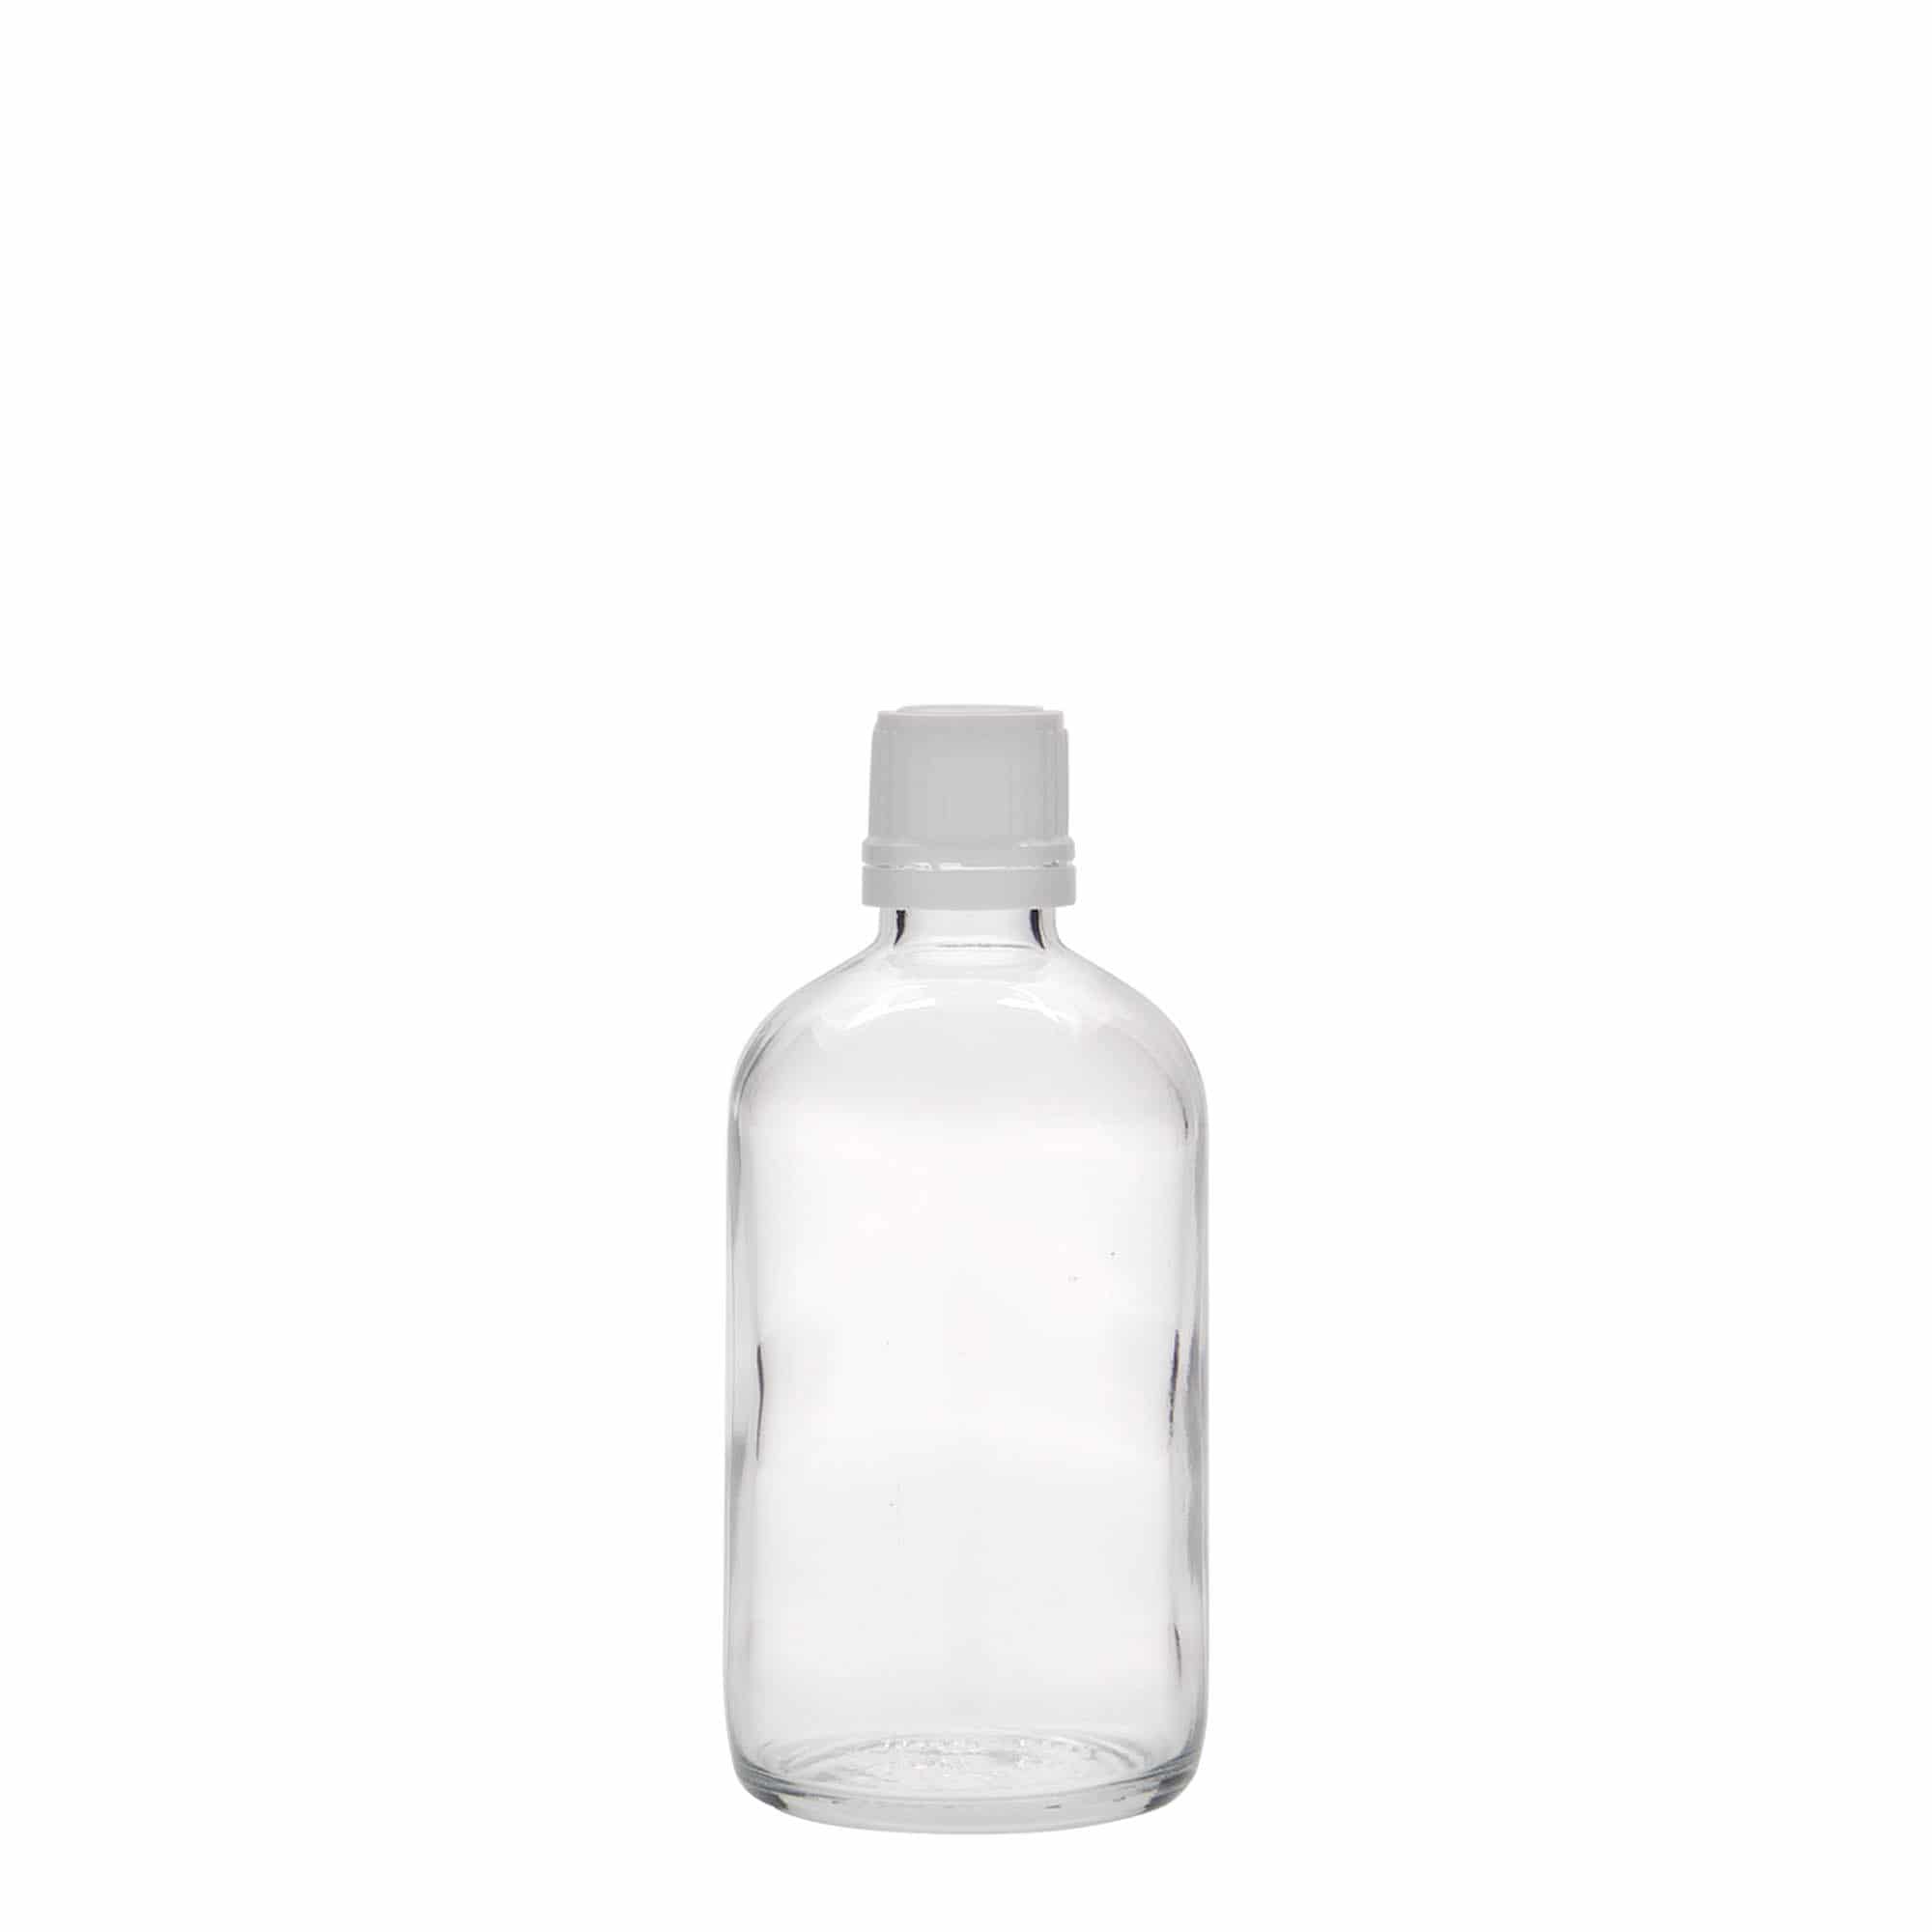 100 ml medicine bottle, glass, closure: DIN 18